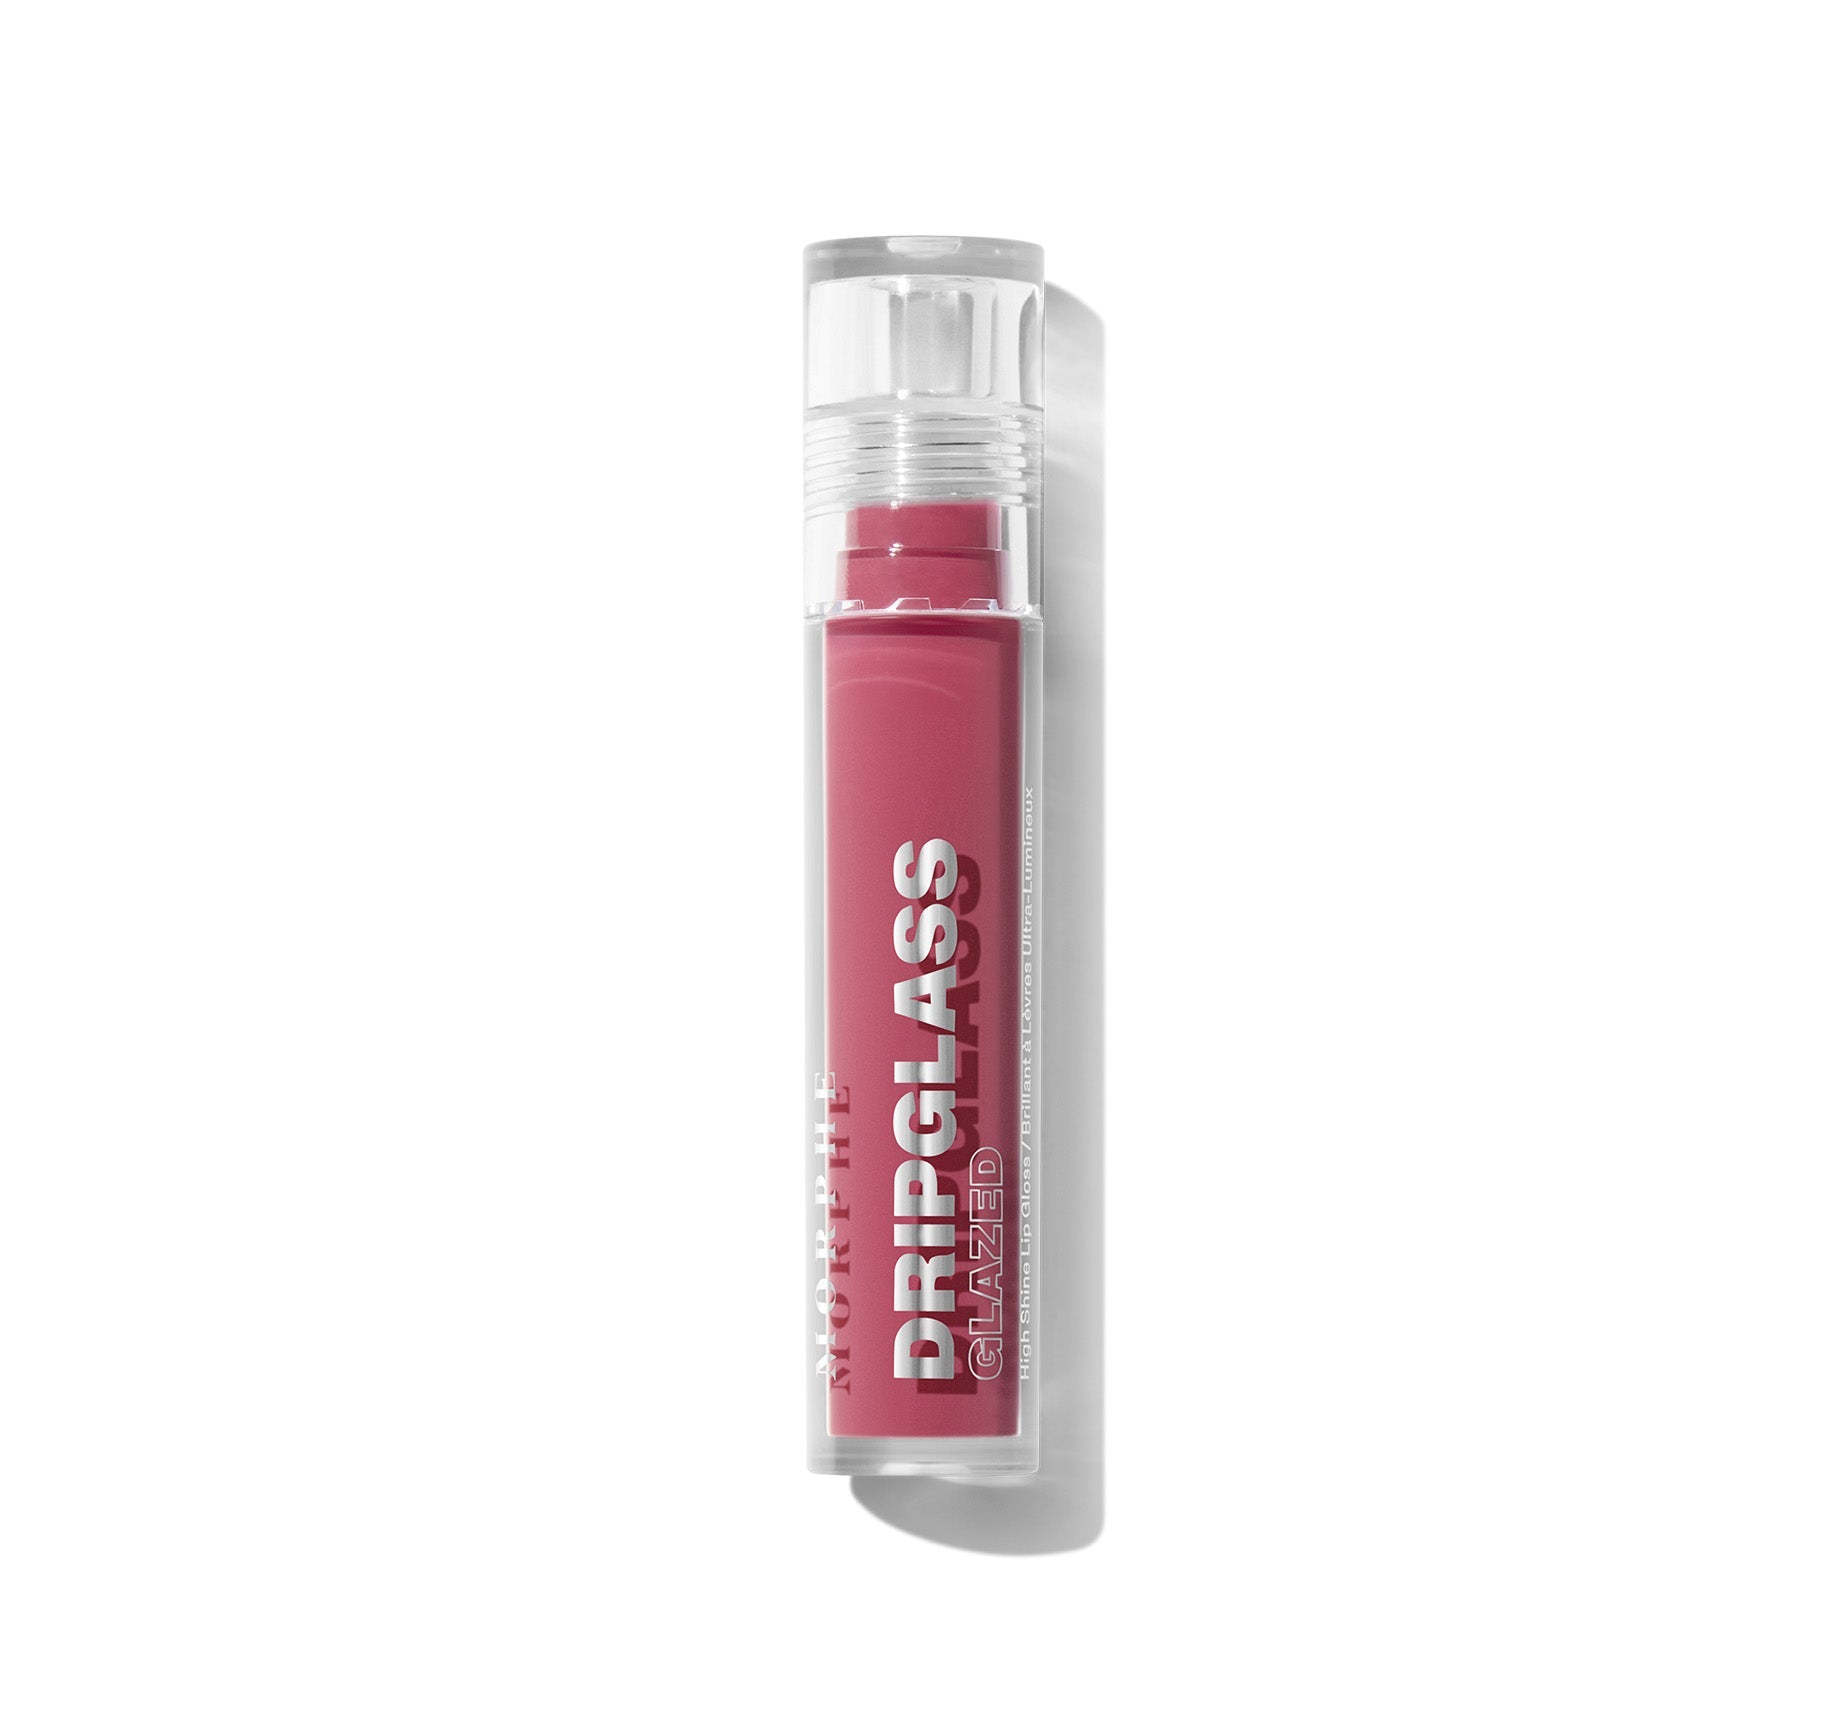 Dripglass Glazed High Shine Lip Gloss - Shatterproof Mauve - Image 5